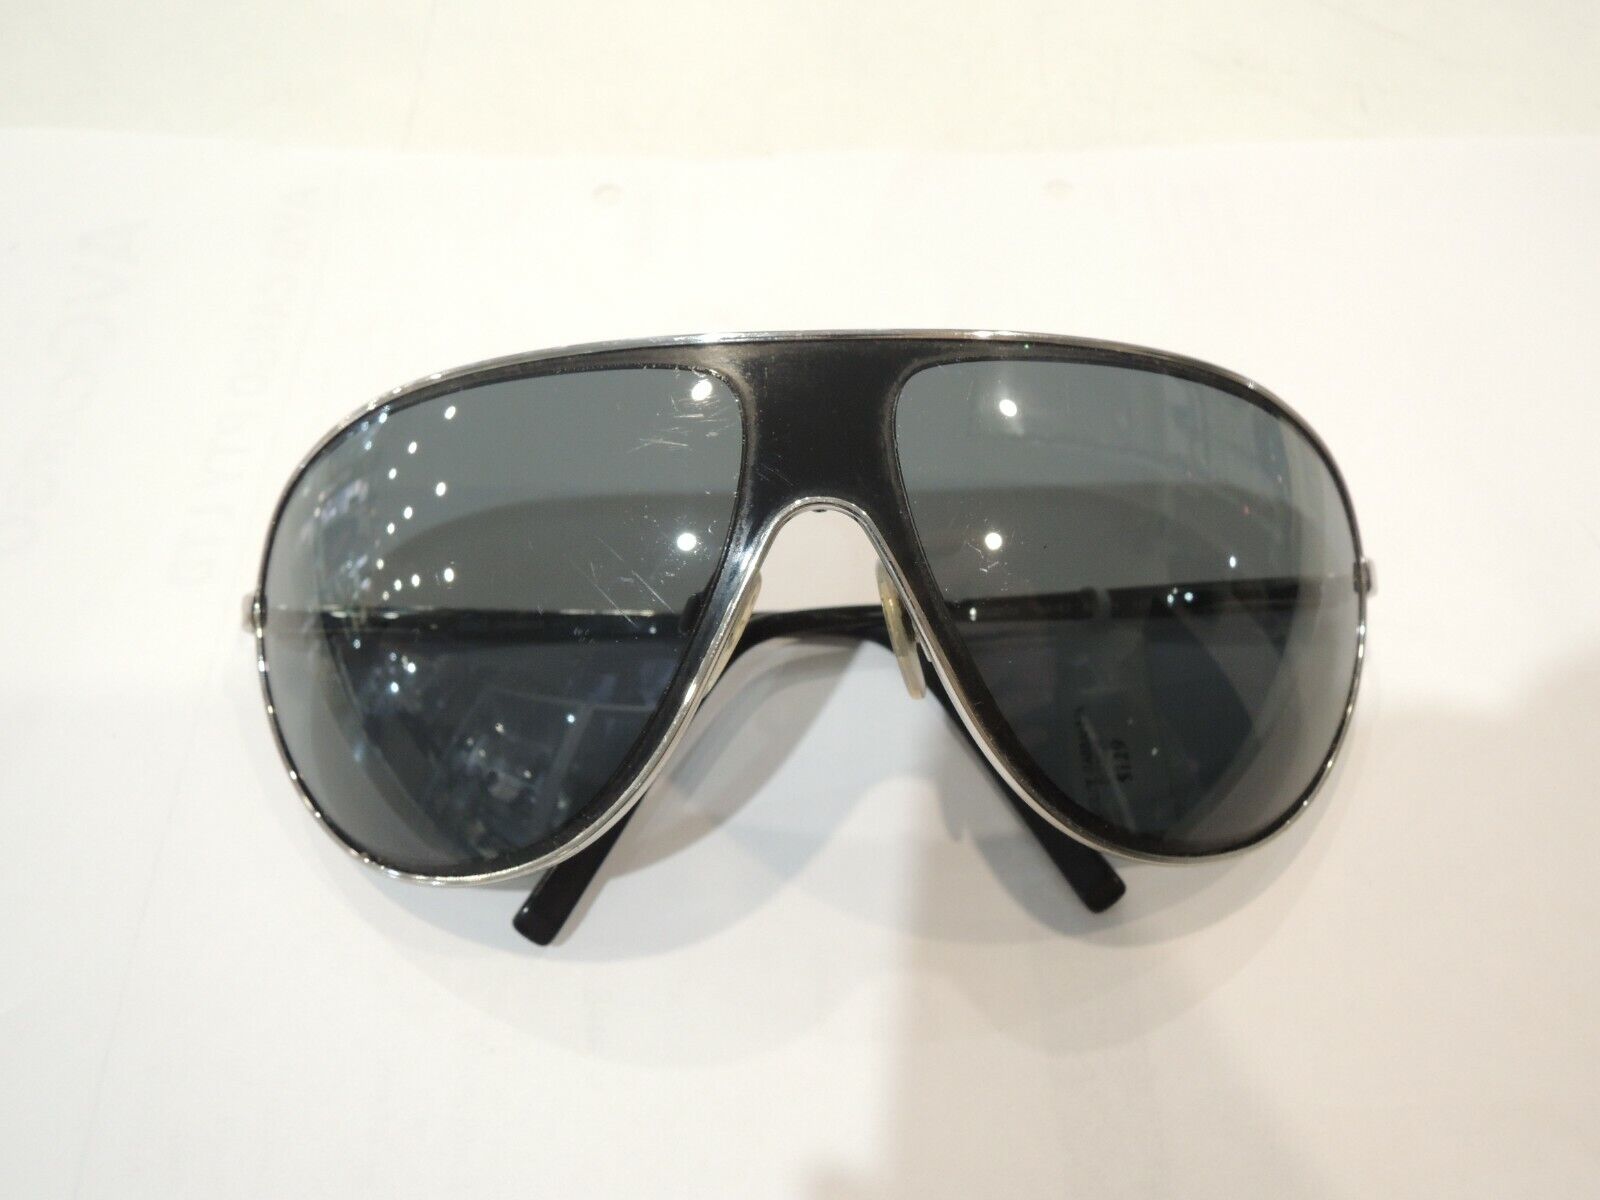 Dolce & Gabbana DG2024 158/87 65-15 125 Sunglasses in Grey - Good Condition  | eBay